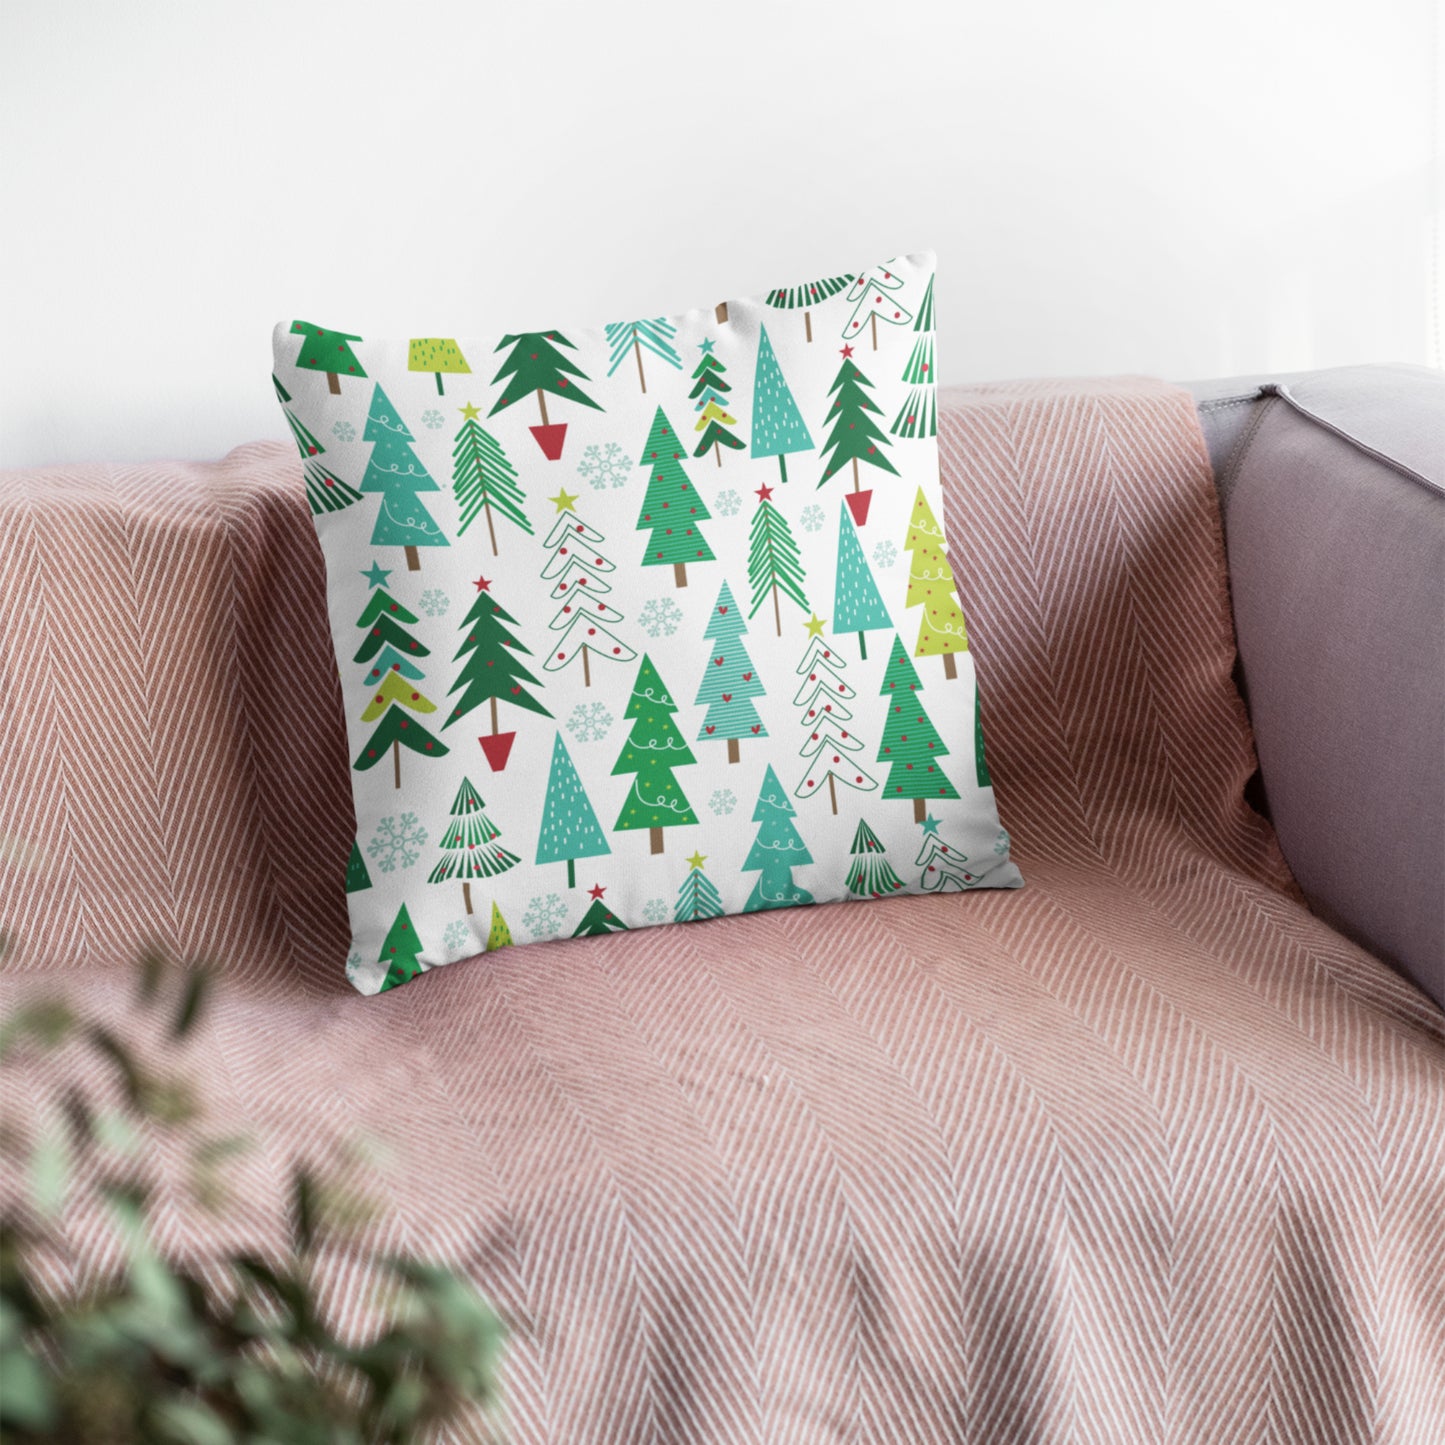 Cozy Holiday Pillow for Festive Decor